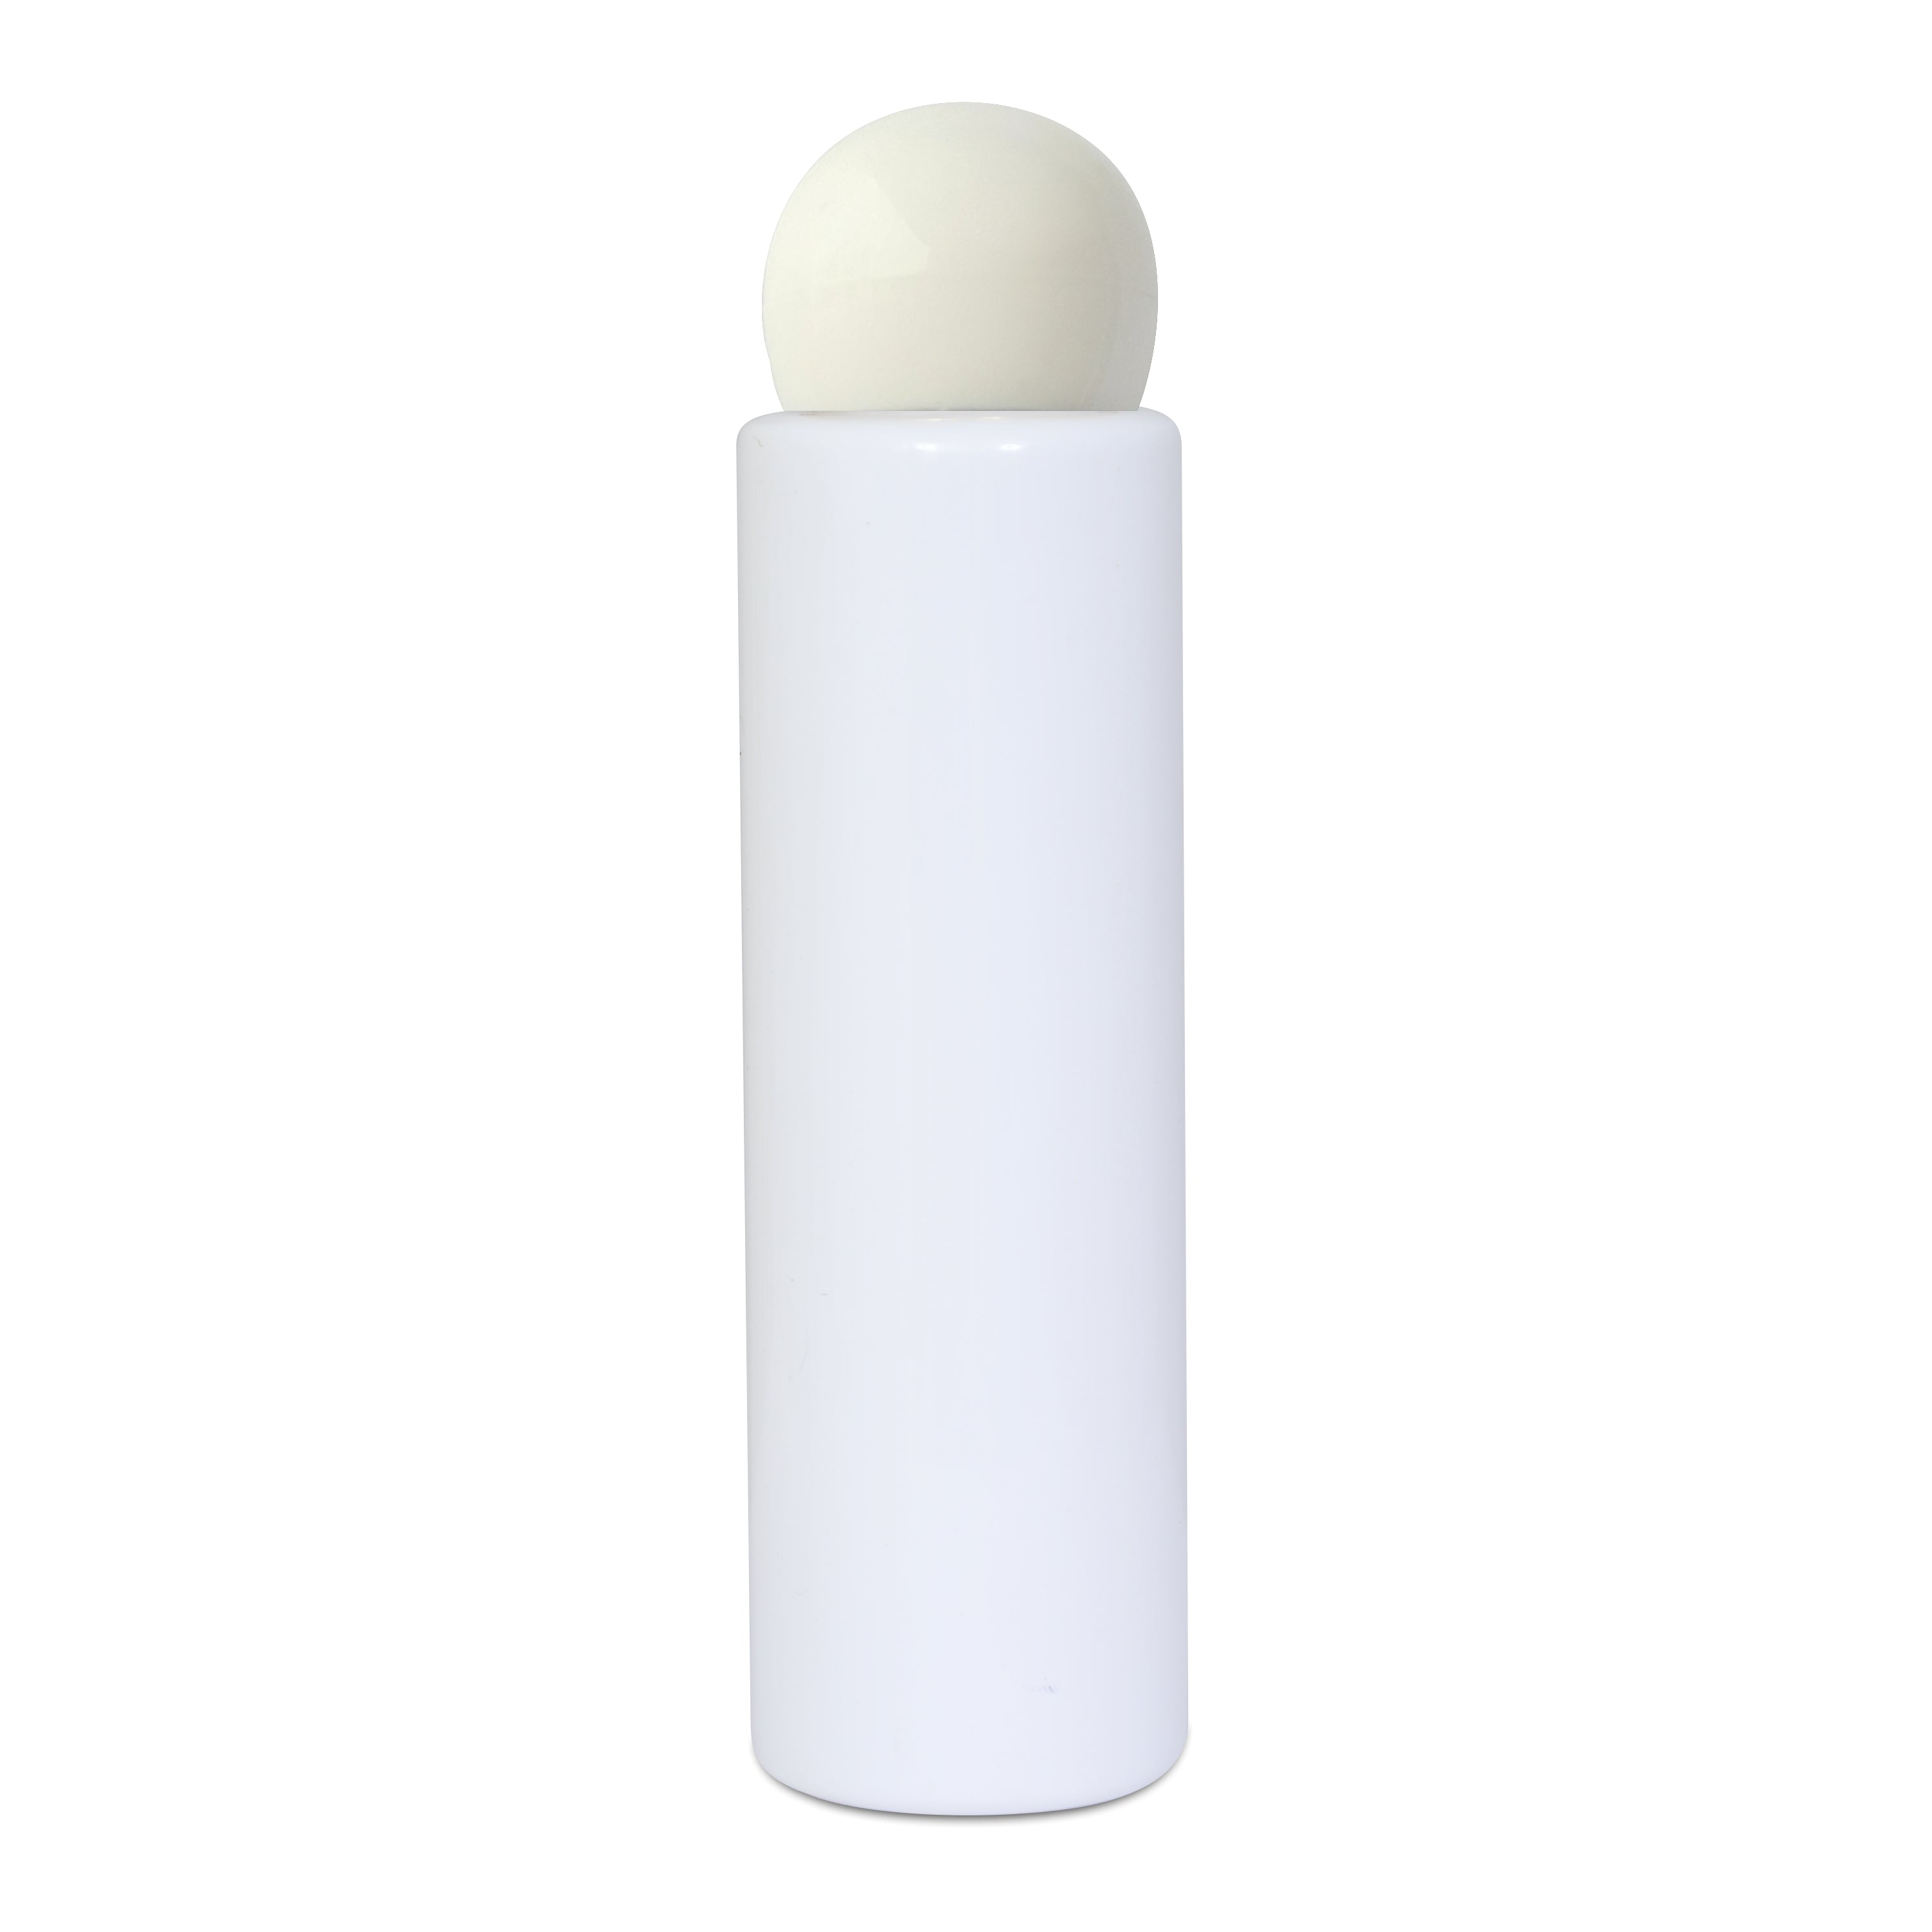 zenvista 100ml empty White Color Bottle With pearl white dome cap for lotion serum oil bottle for shampoo, shampoo bottle, sanitizer bottle, mist spray bottle, plastic bottle, lotion pump bottle